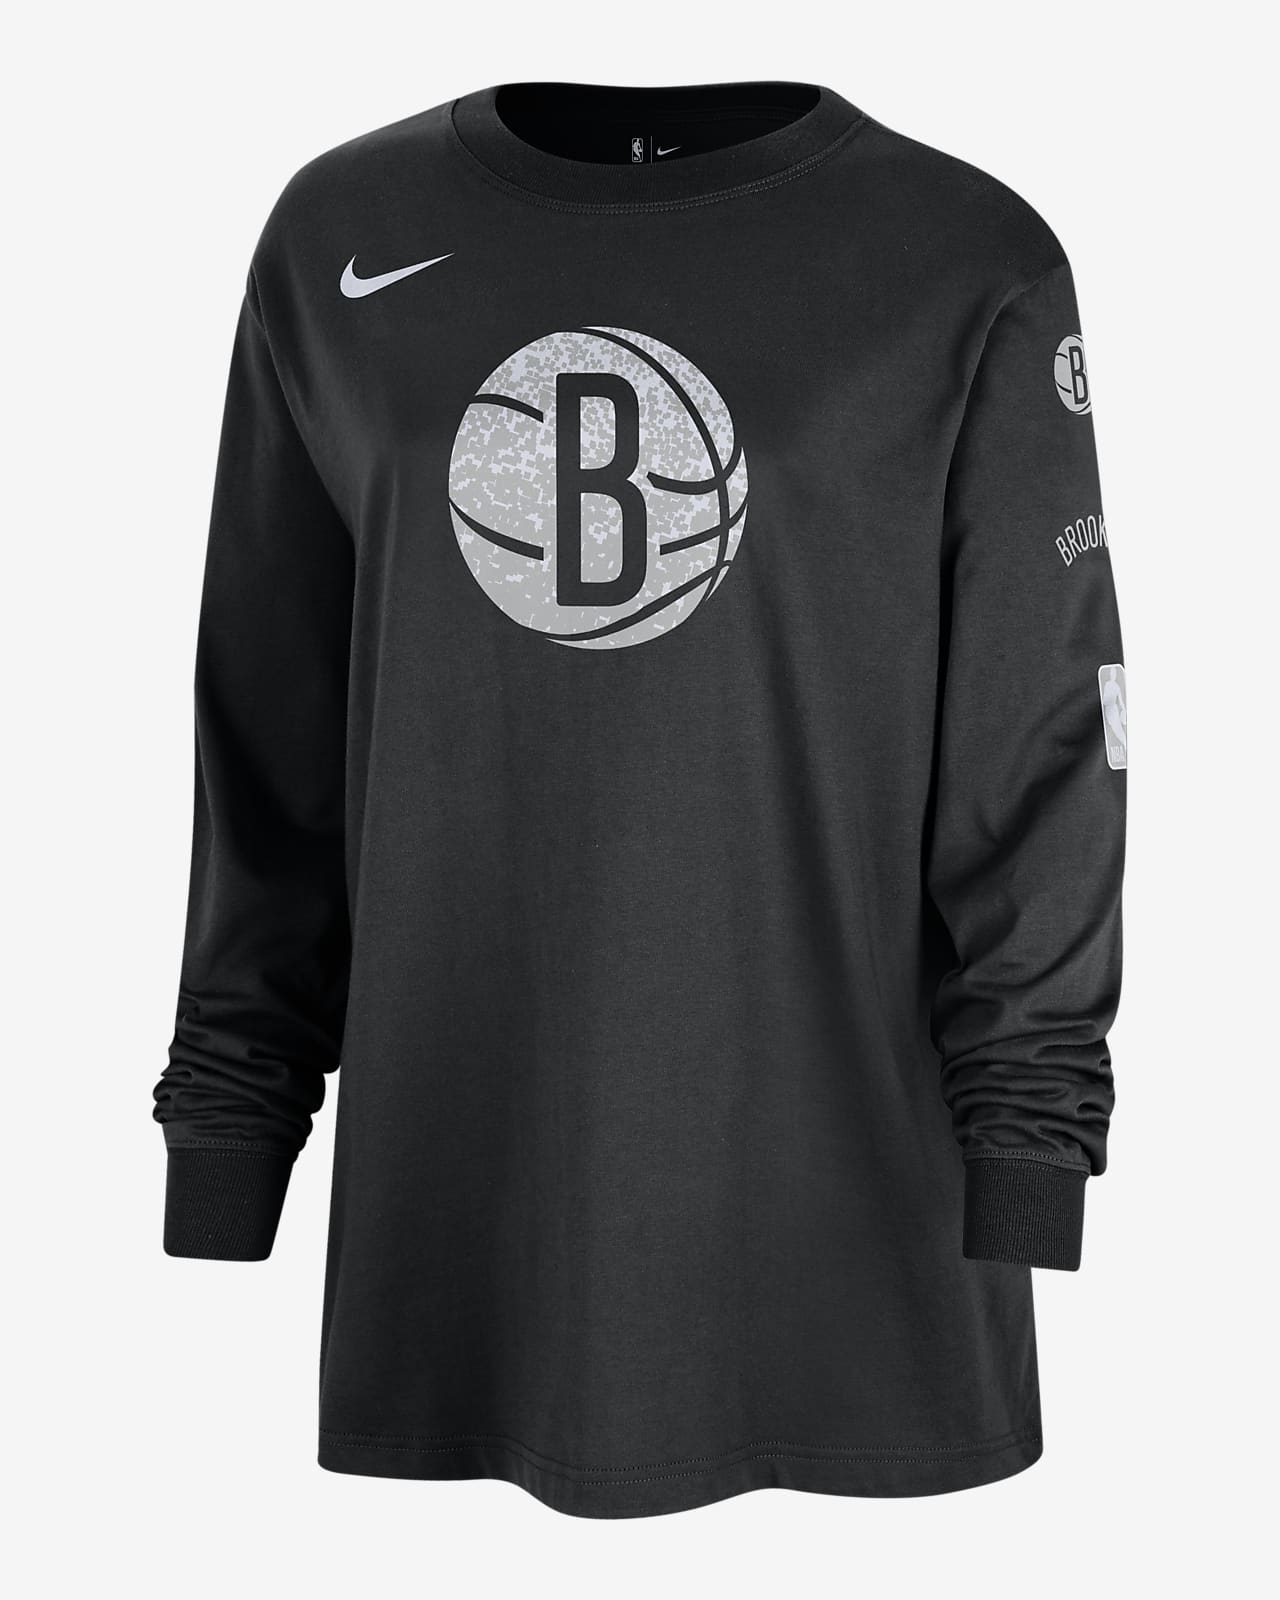 T-shirt à manches longues Nike NBA Brooklyn Nets Essential pour femme